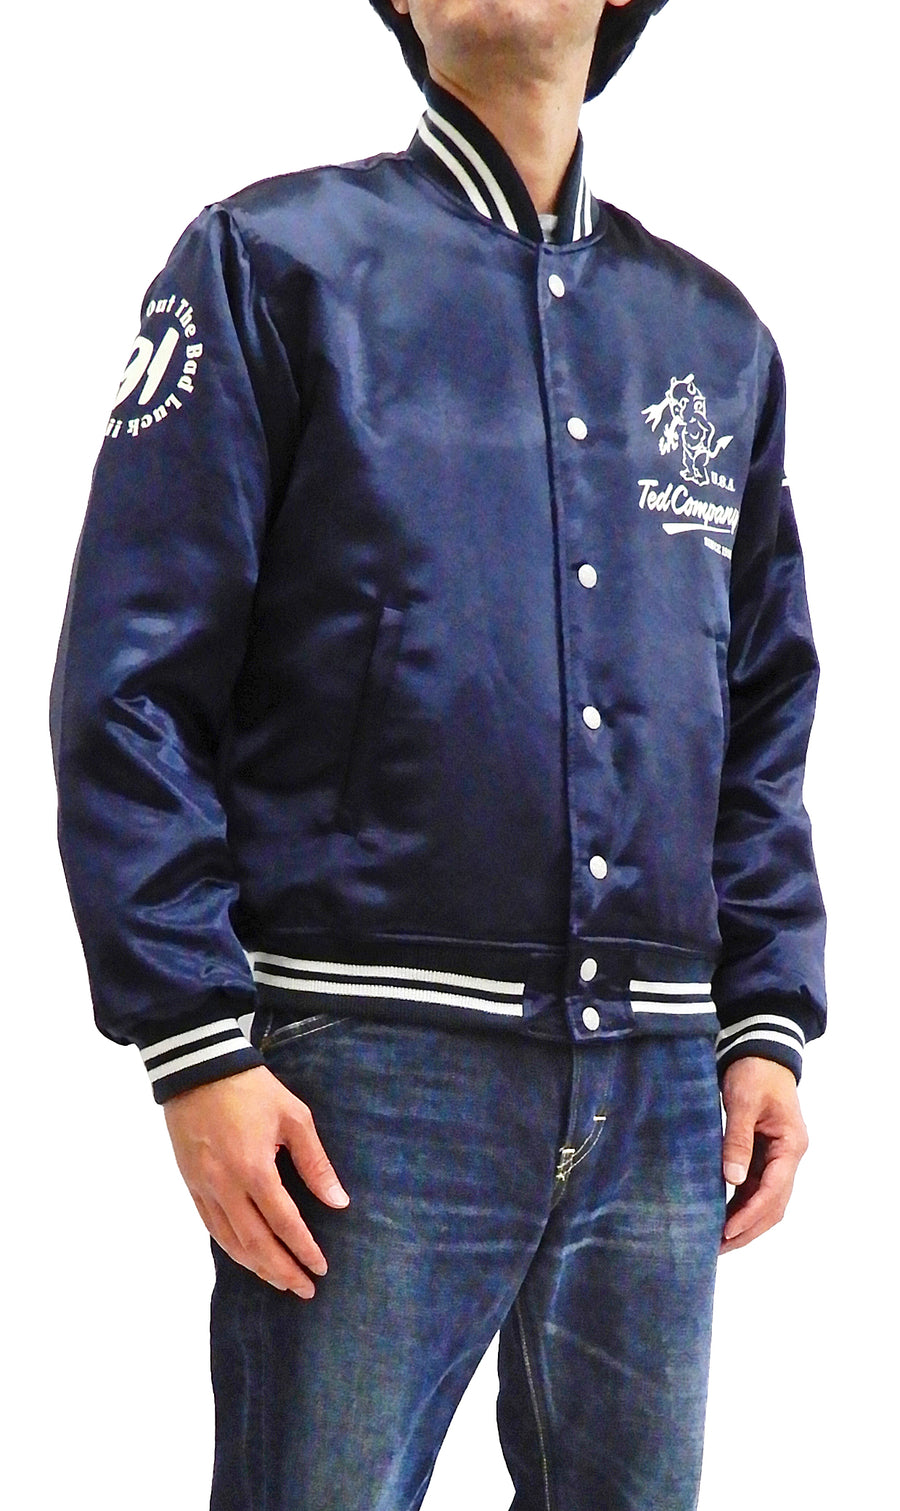 Polo by Ralph Lauren, Jackets & Coats, Ralph Lauren Polo Mlb Yankees  Jacket Size L